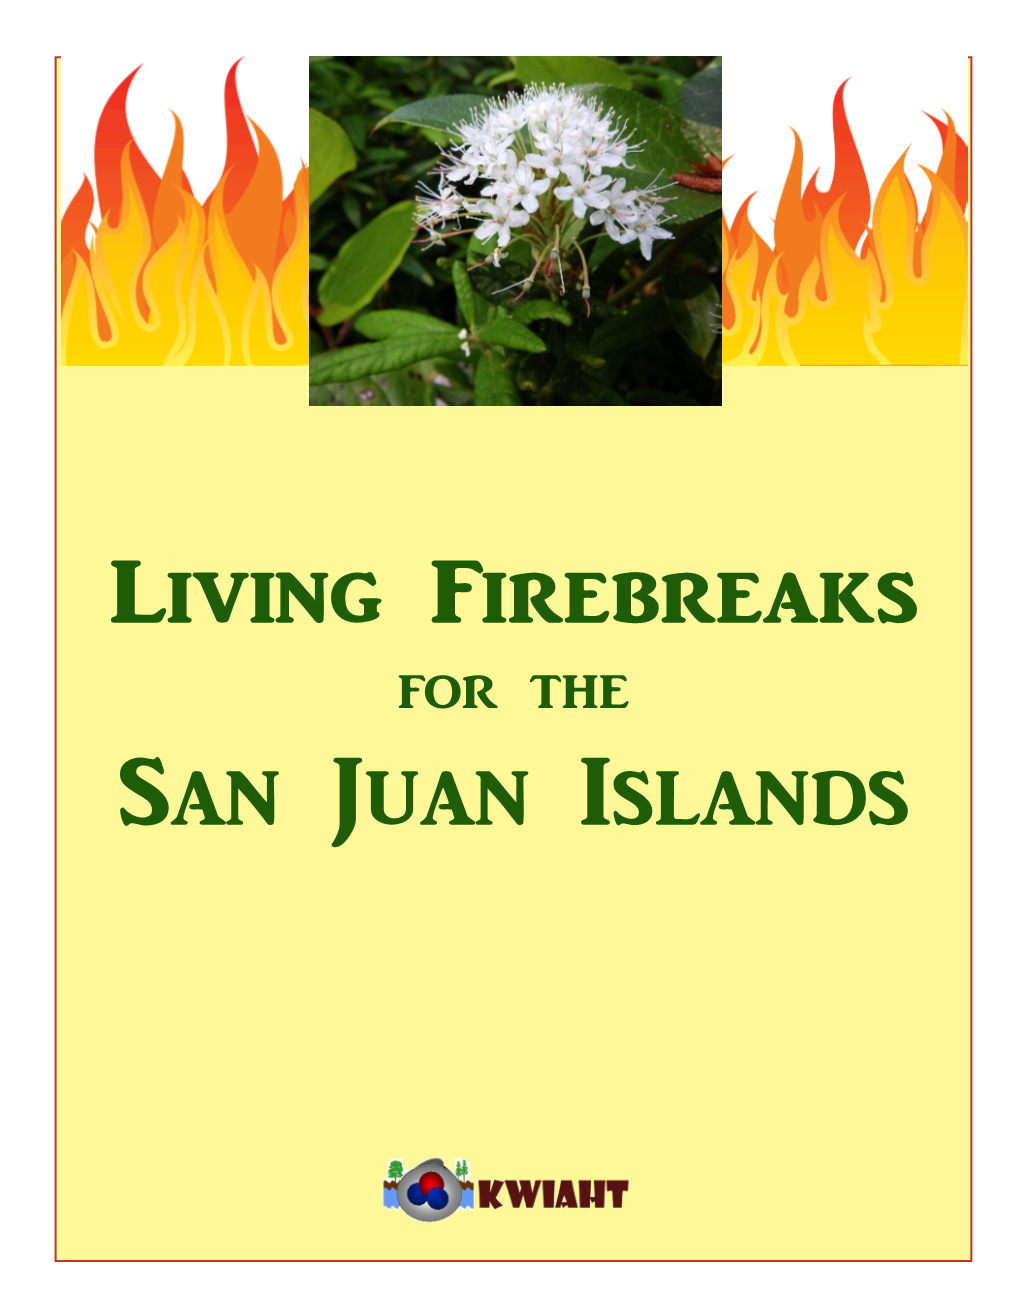 Living Firebreaks Booklet